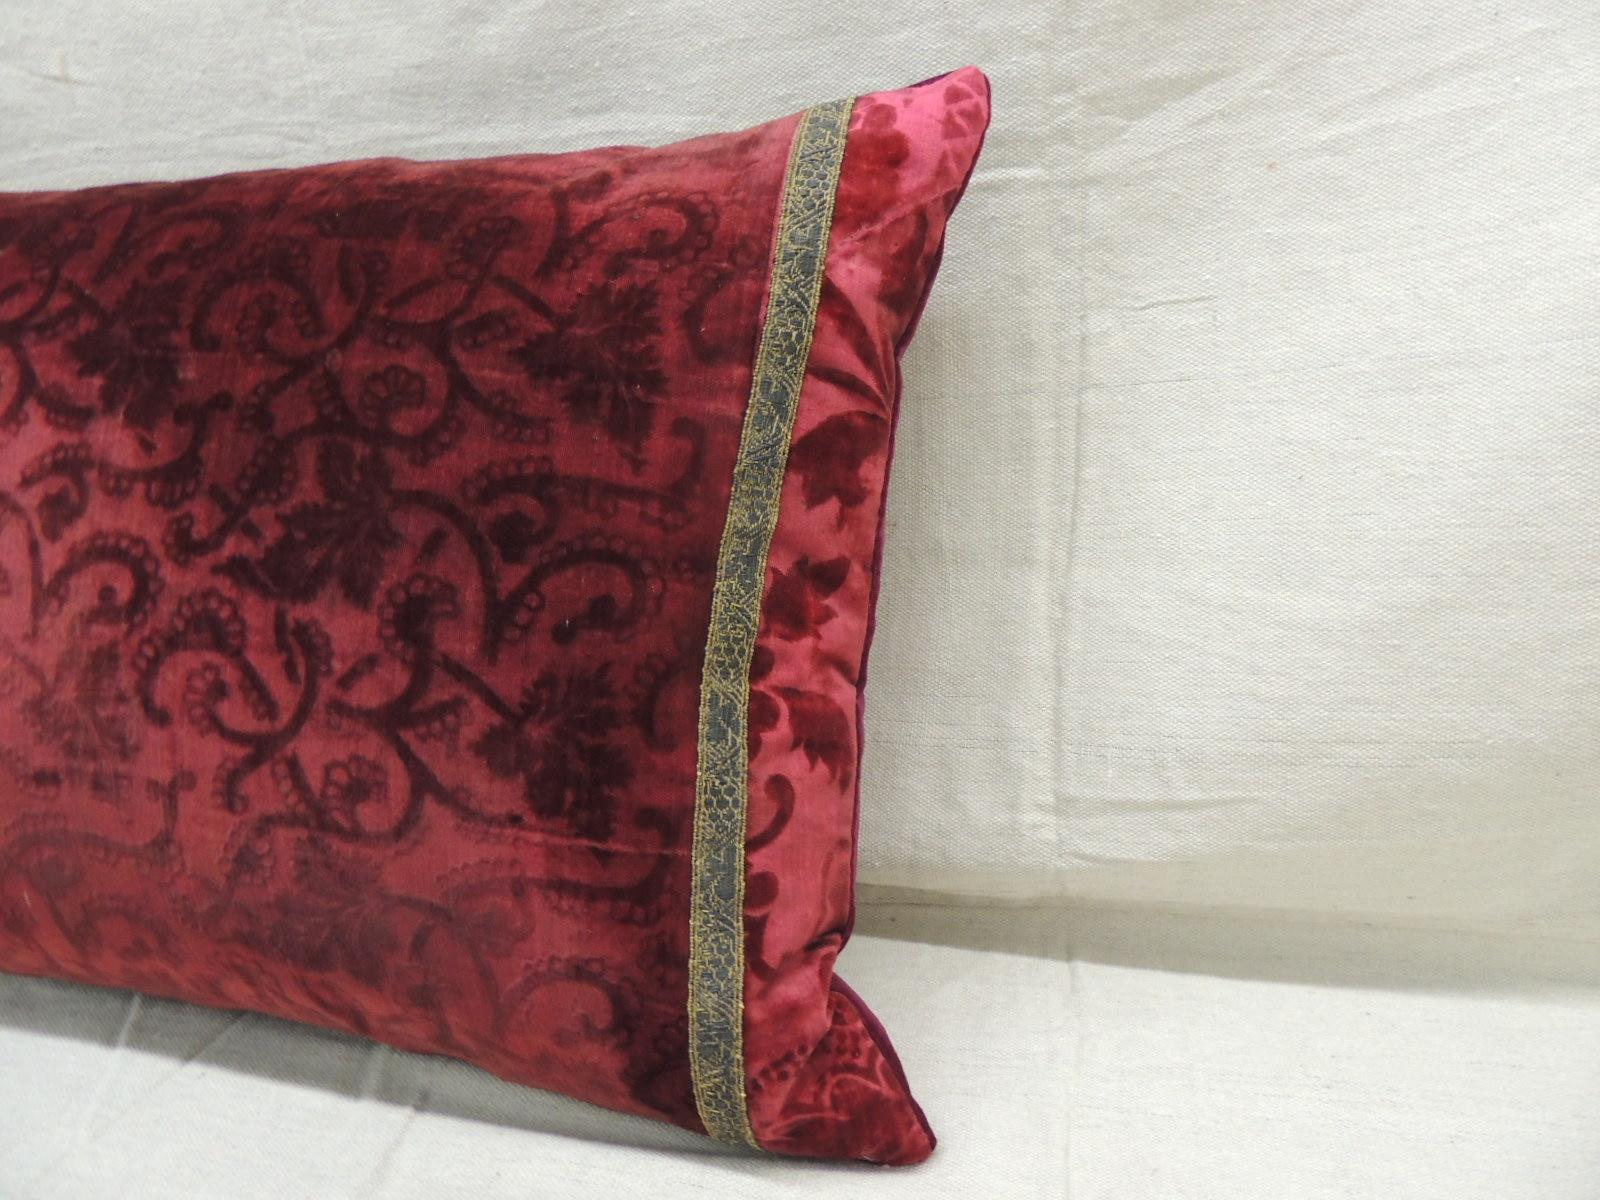 Antique Red Silk Velvet Applique Bolster Decorative Pillow In Good Condition For Sale In Oakland Park, FL